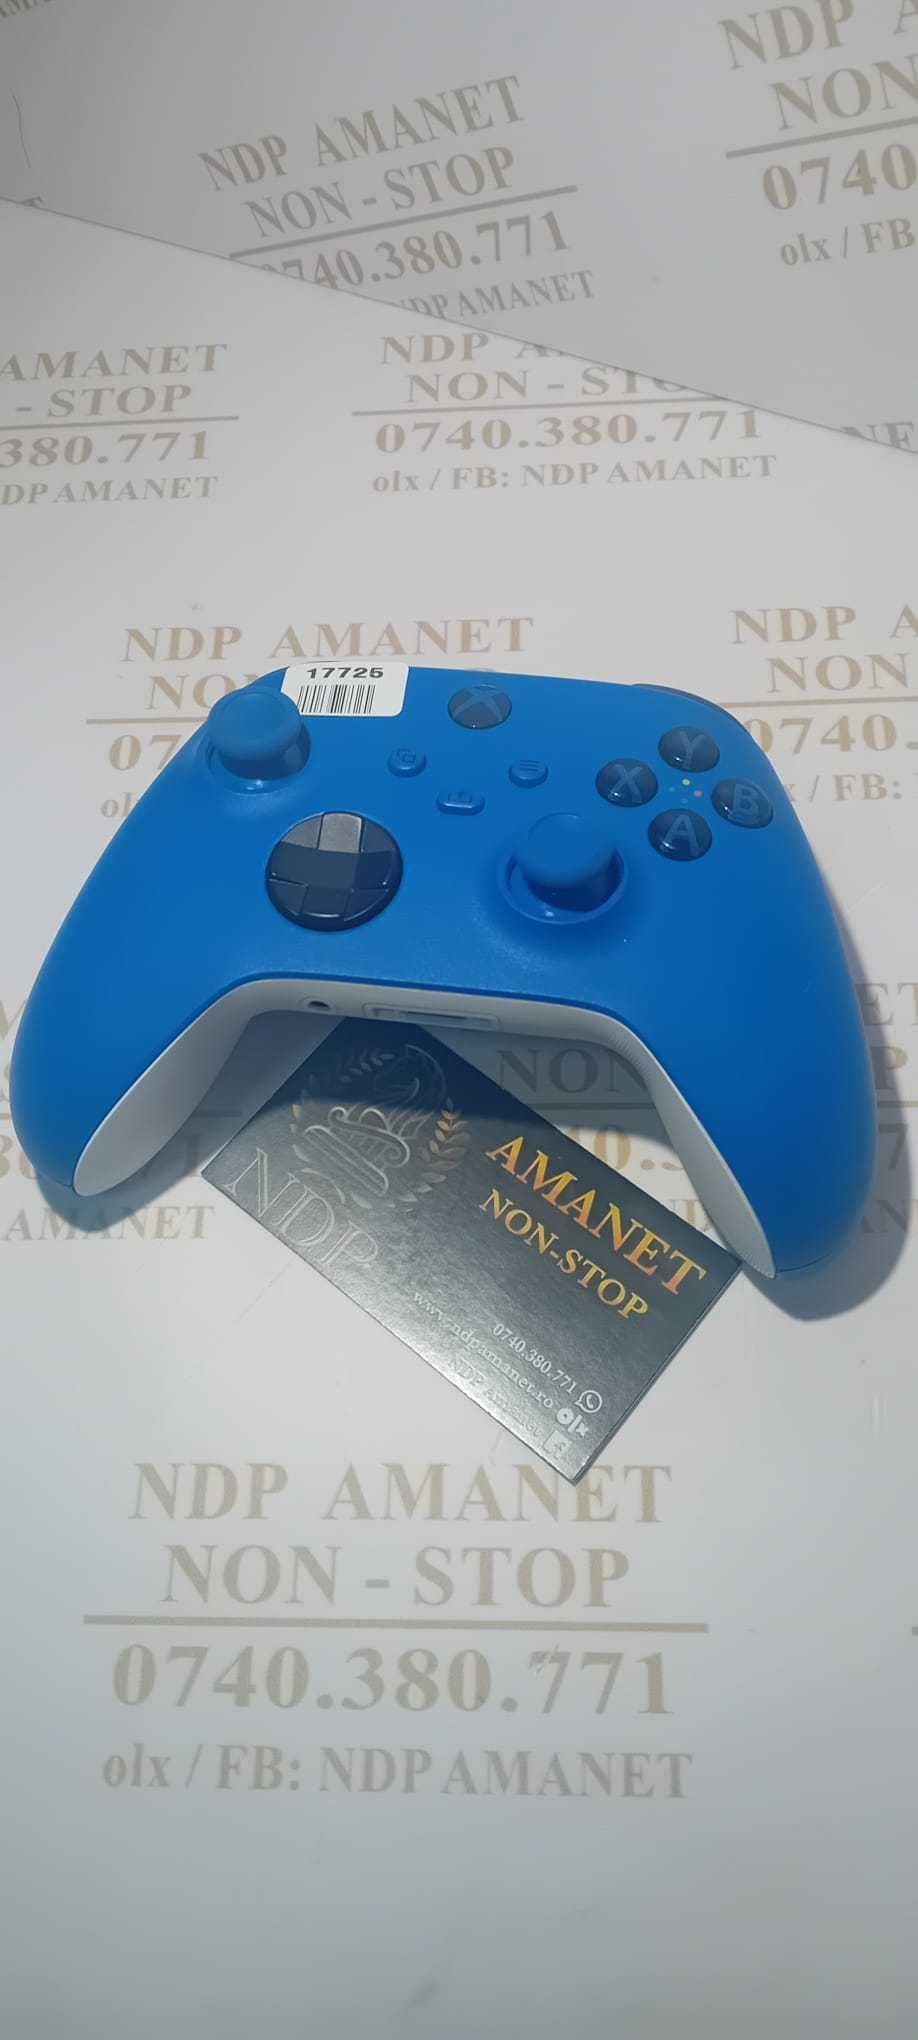 NDP Amanet Calea Mosilor 298     CONTROLLER XBOX X BLUE (17725)